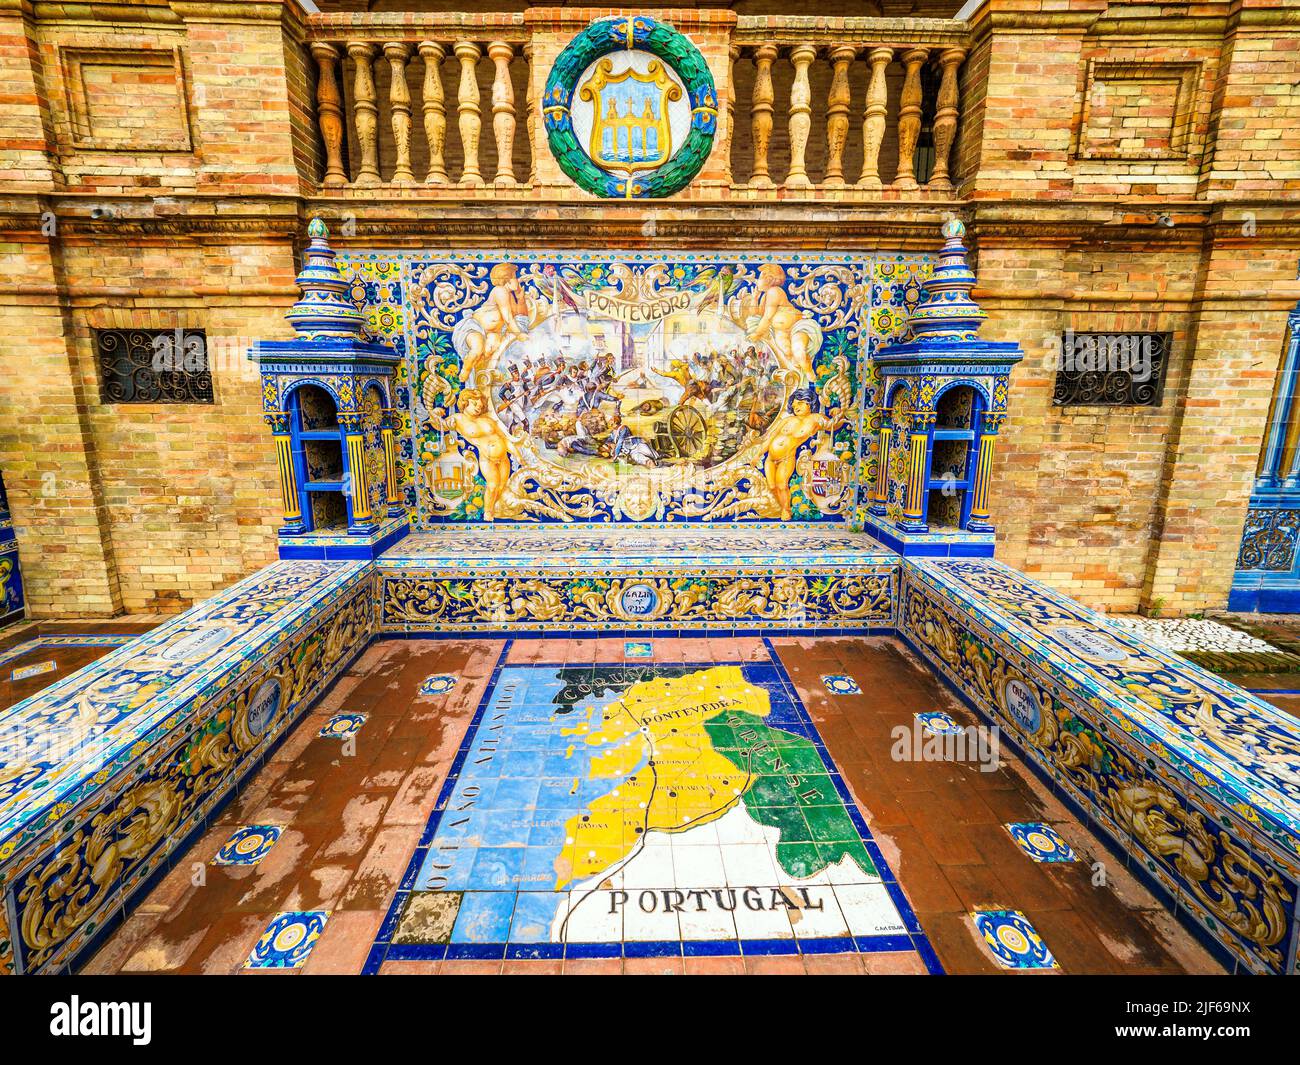 Detail of the tiled spanish province of Pontevedra alcove along the walls of Plaza de Espana building - Seville,  Spain Stock Photo